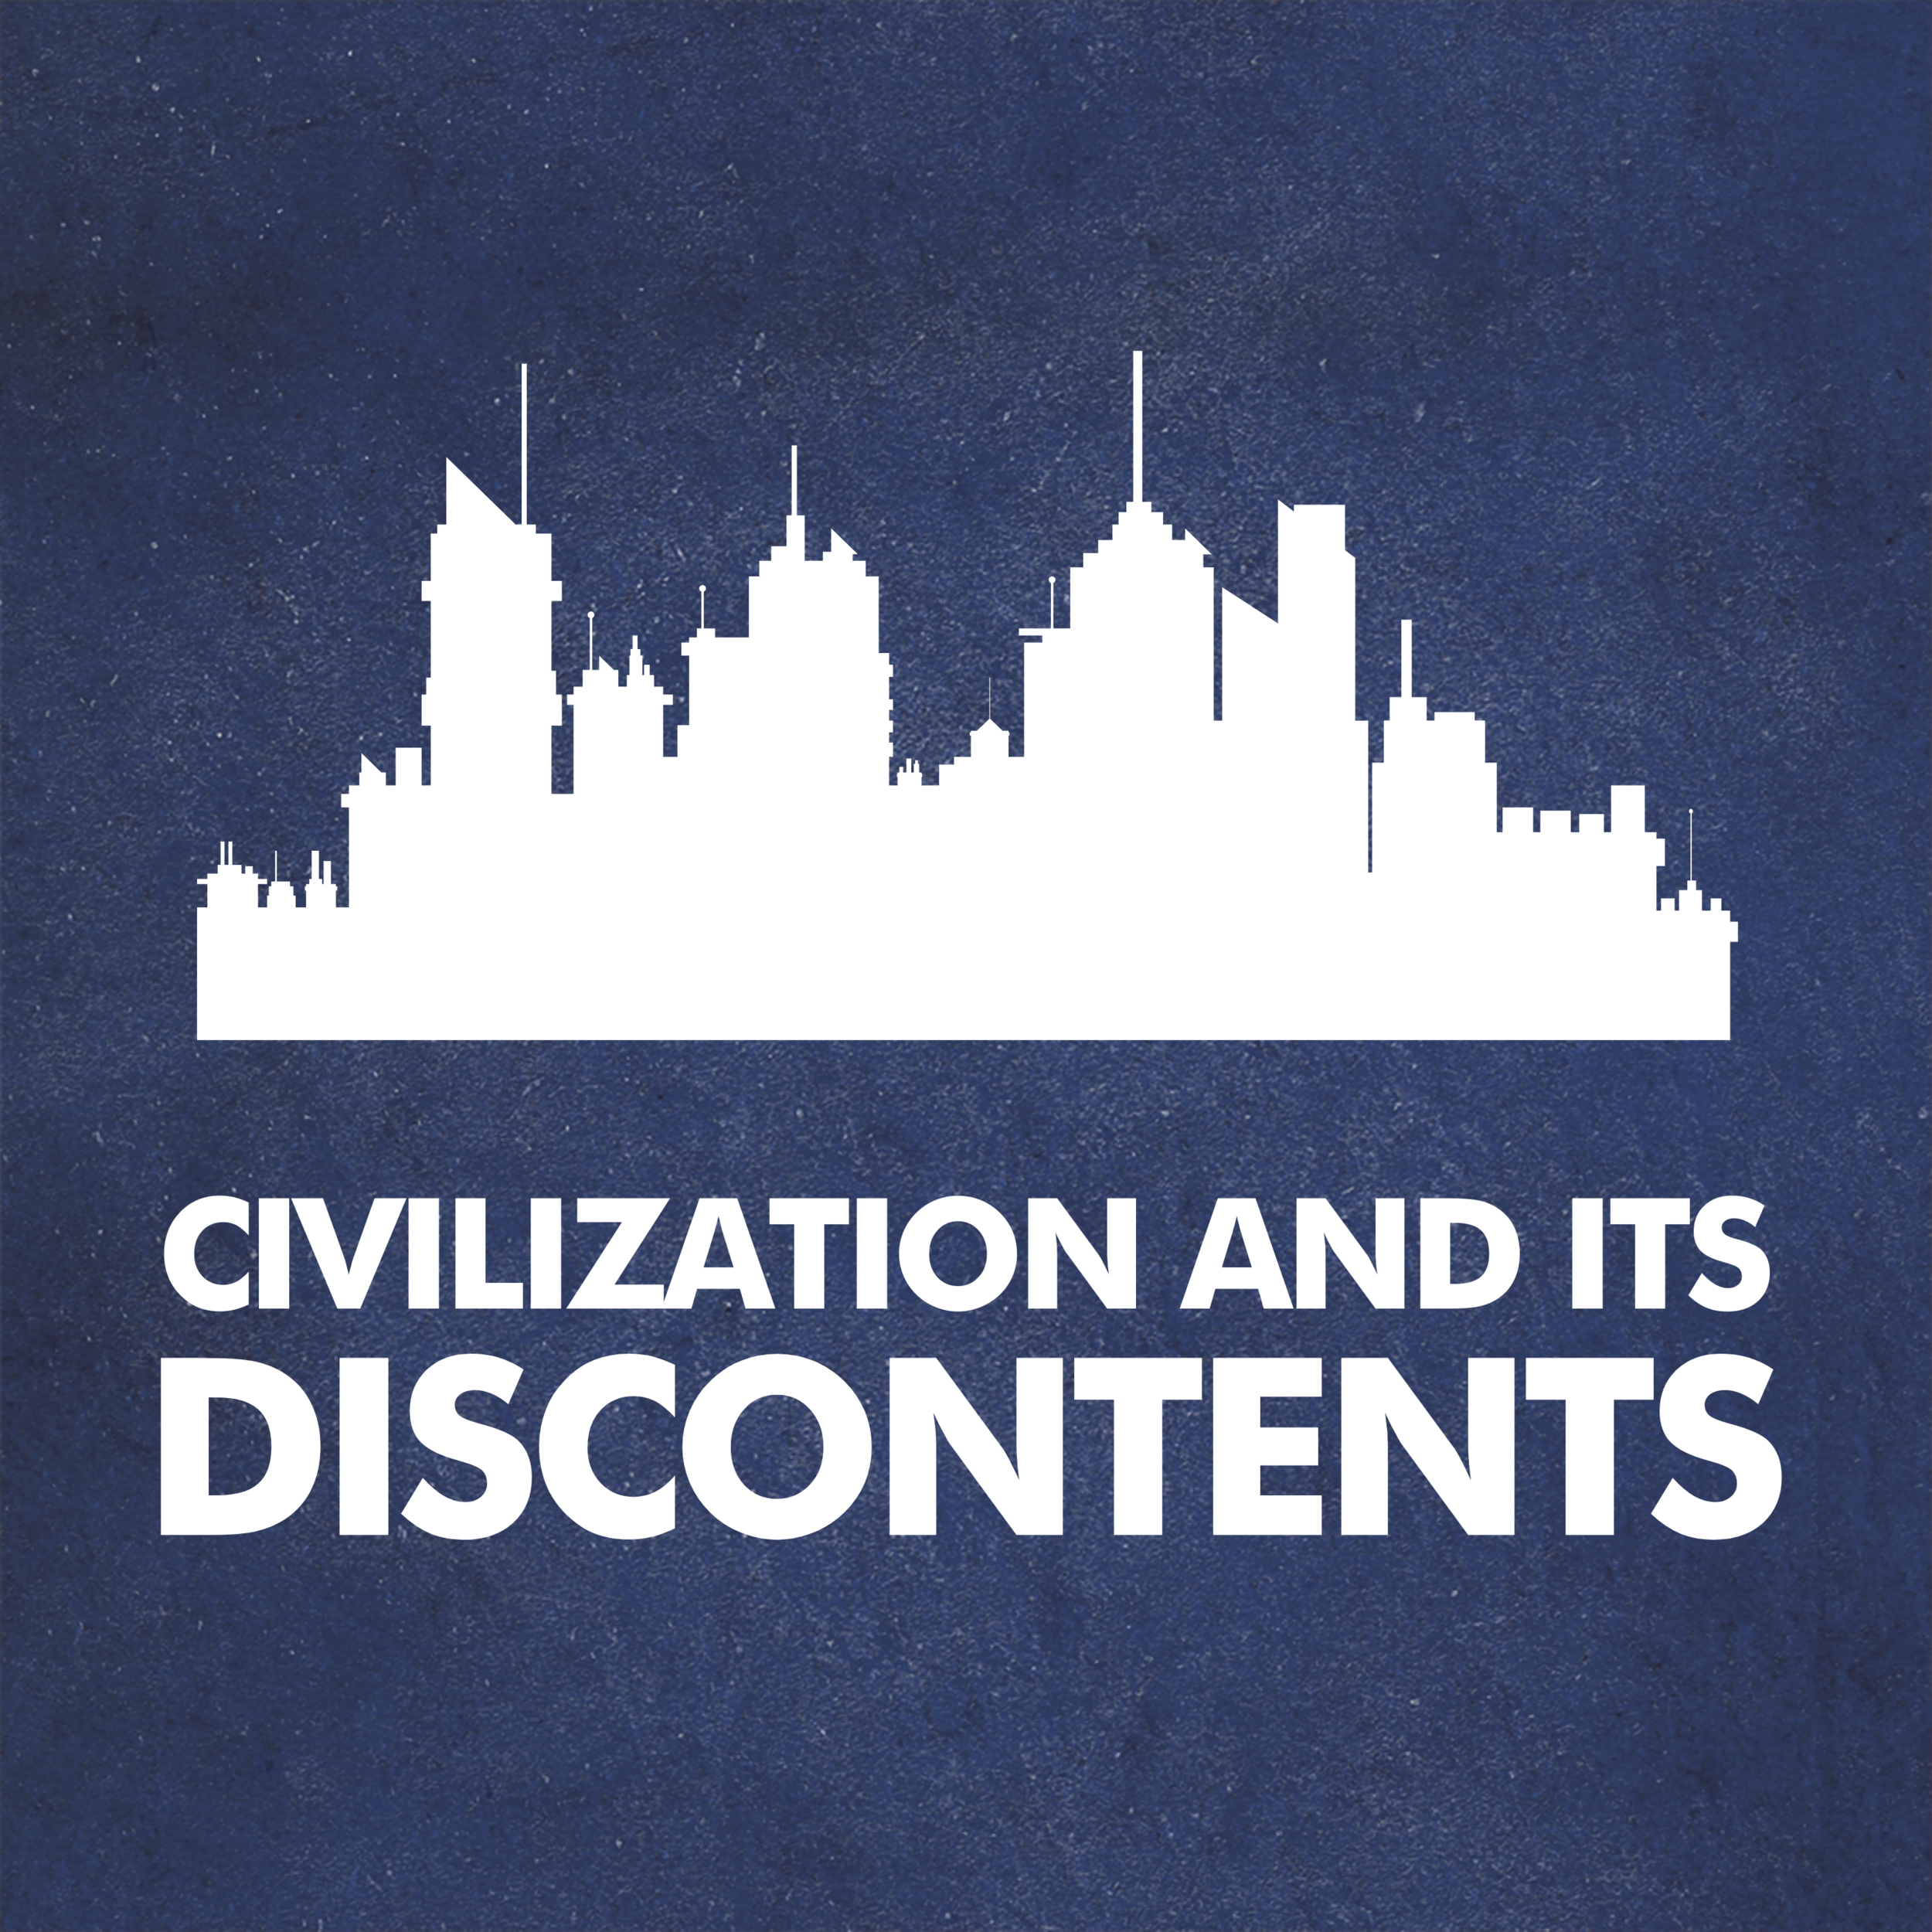 sigmund freud civilization and its discontents summary